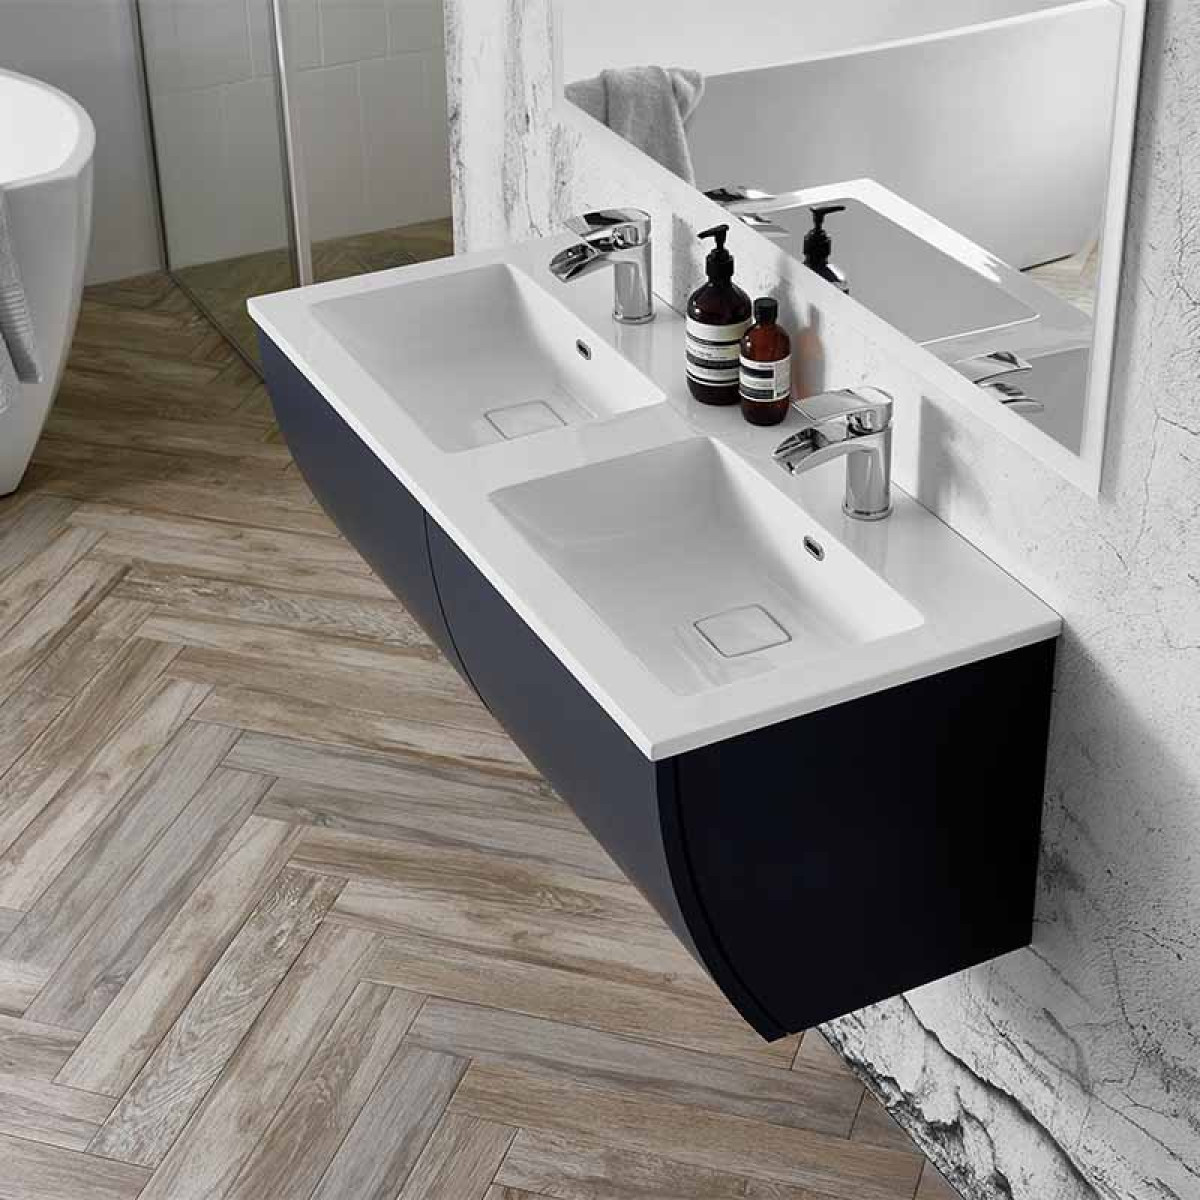 Elation Kiyo 1100mm Wall Hung Indigo, Double Basin Vanity Units For Bathroom Uk